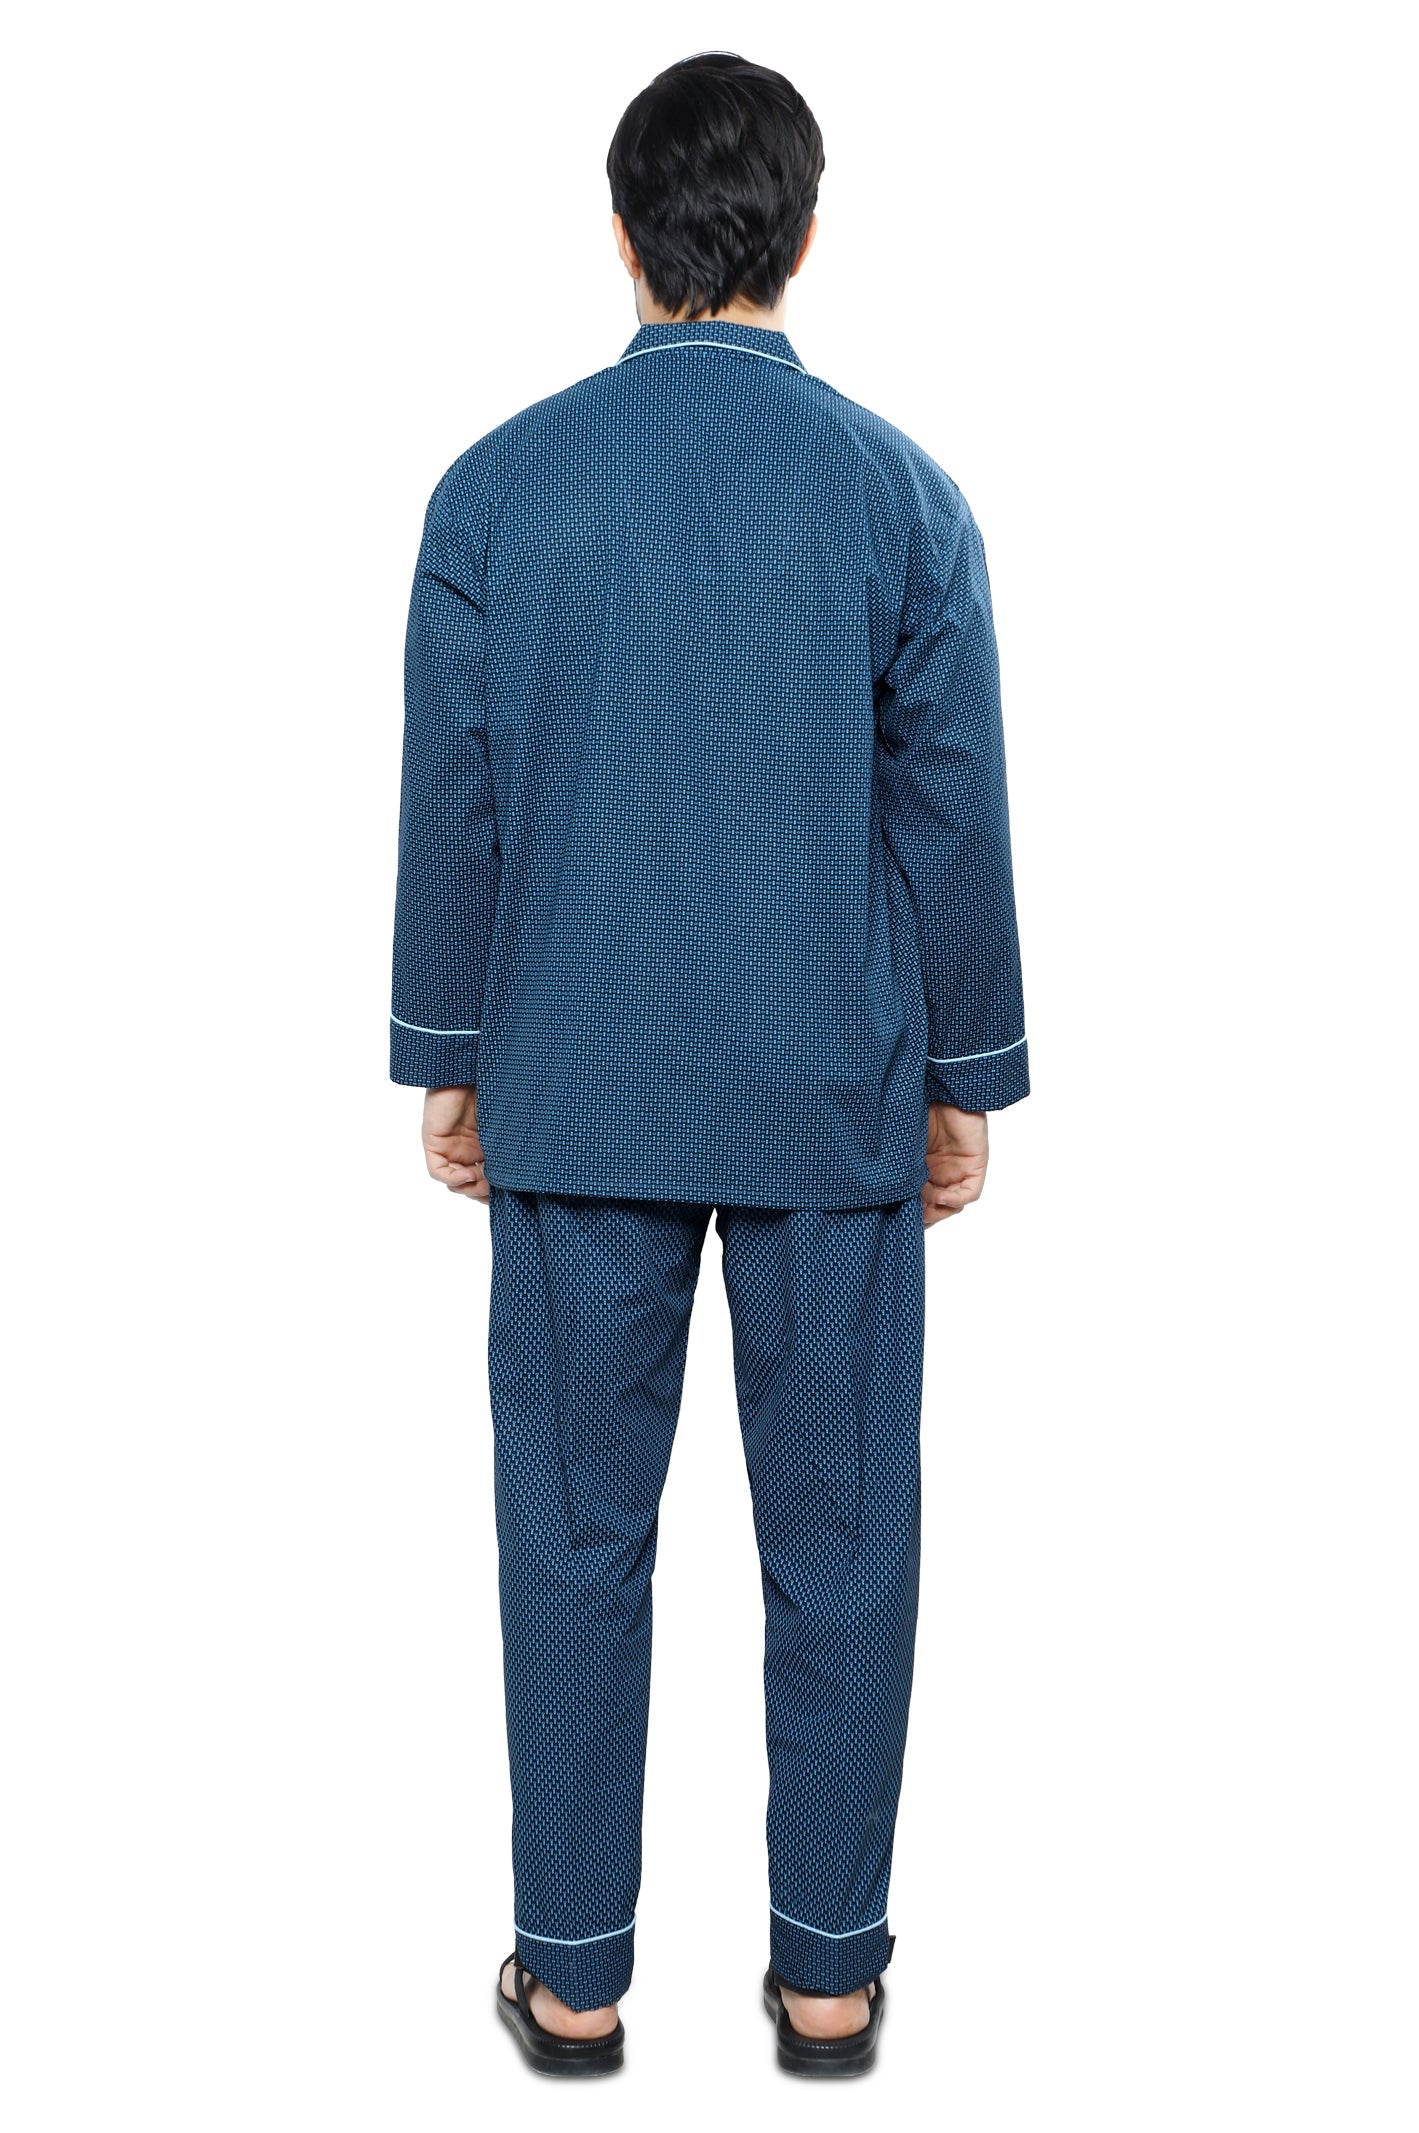 Diner's Night Suit for Men SKU: FNS010-TEAL - Diners